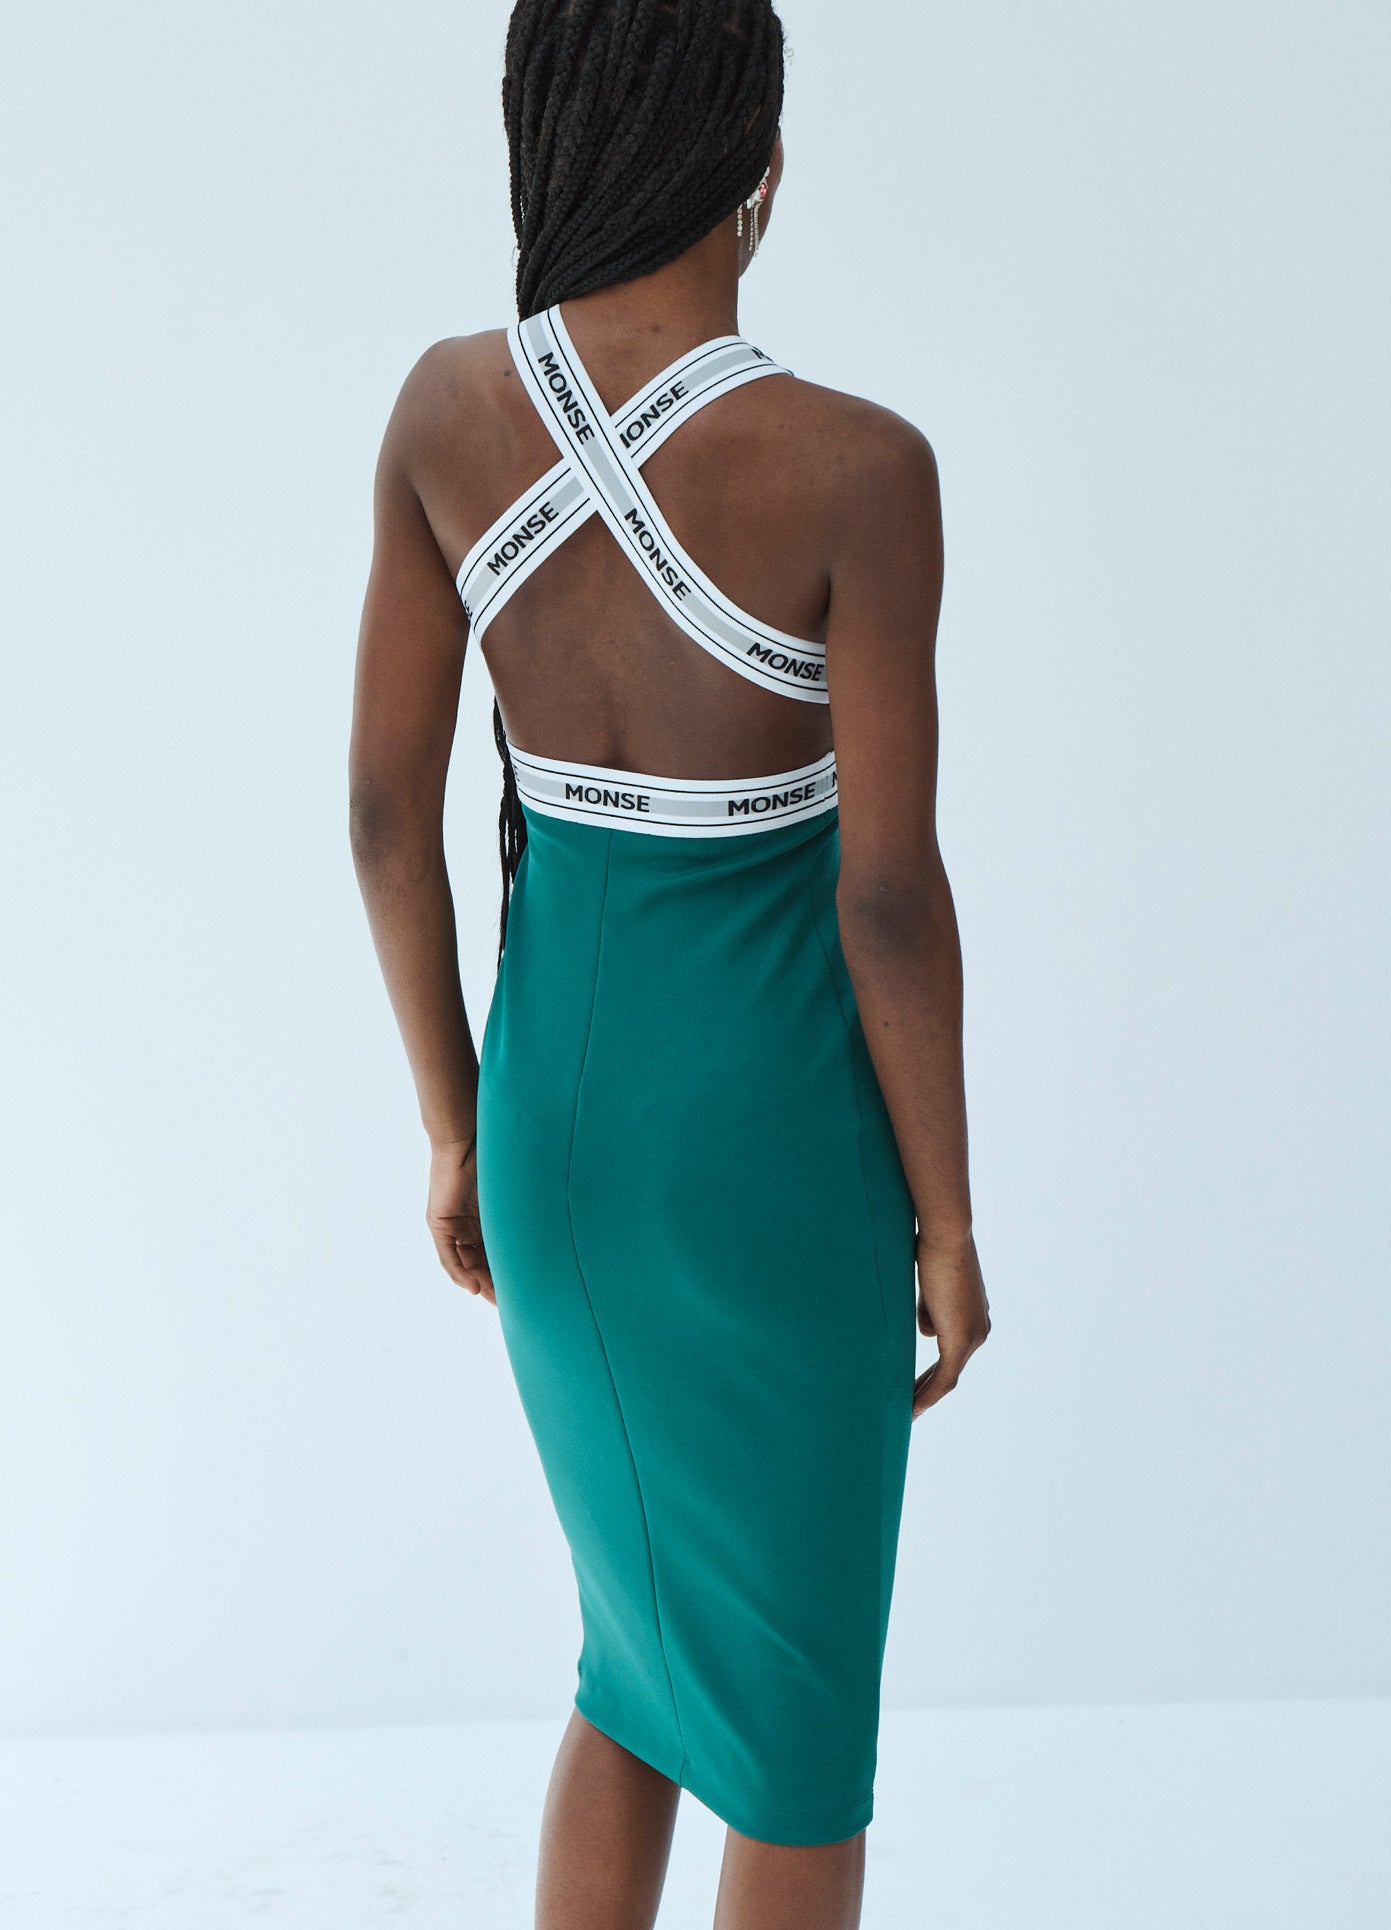 MONSE Scuba Sleeveless Logo Dress in Green on Model Back View